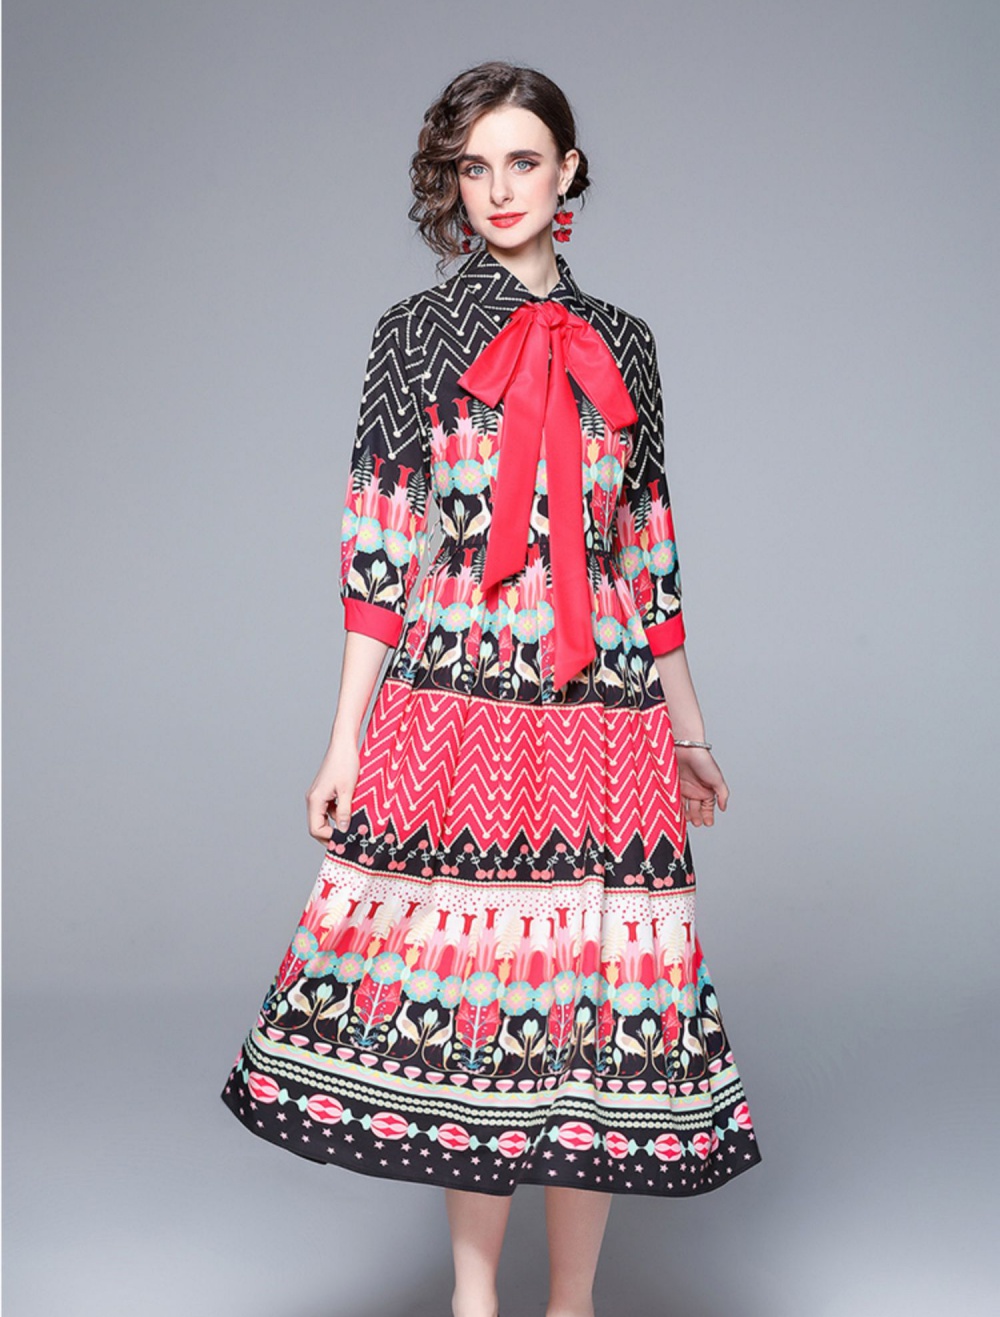 Printing long fashion and elegant slim red dress for women